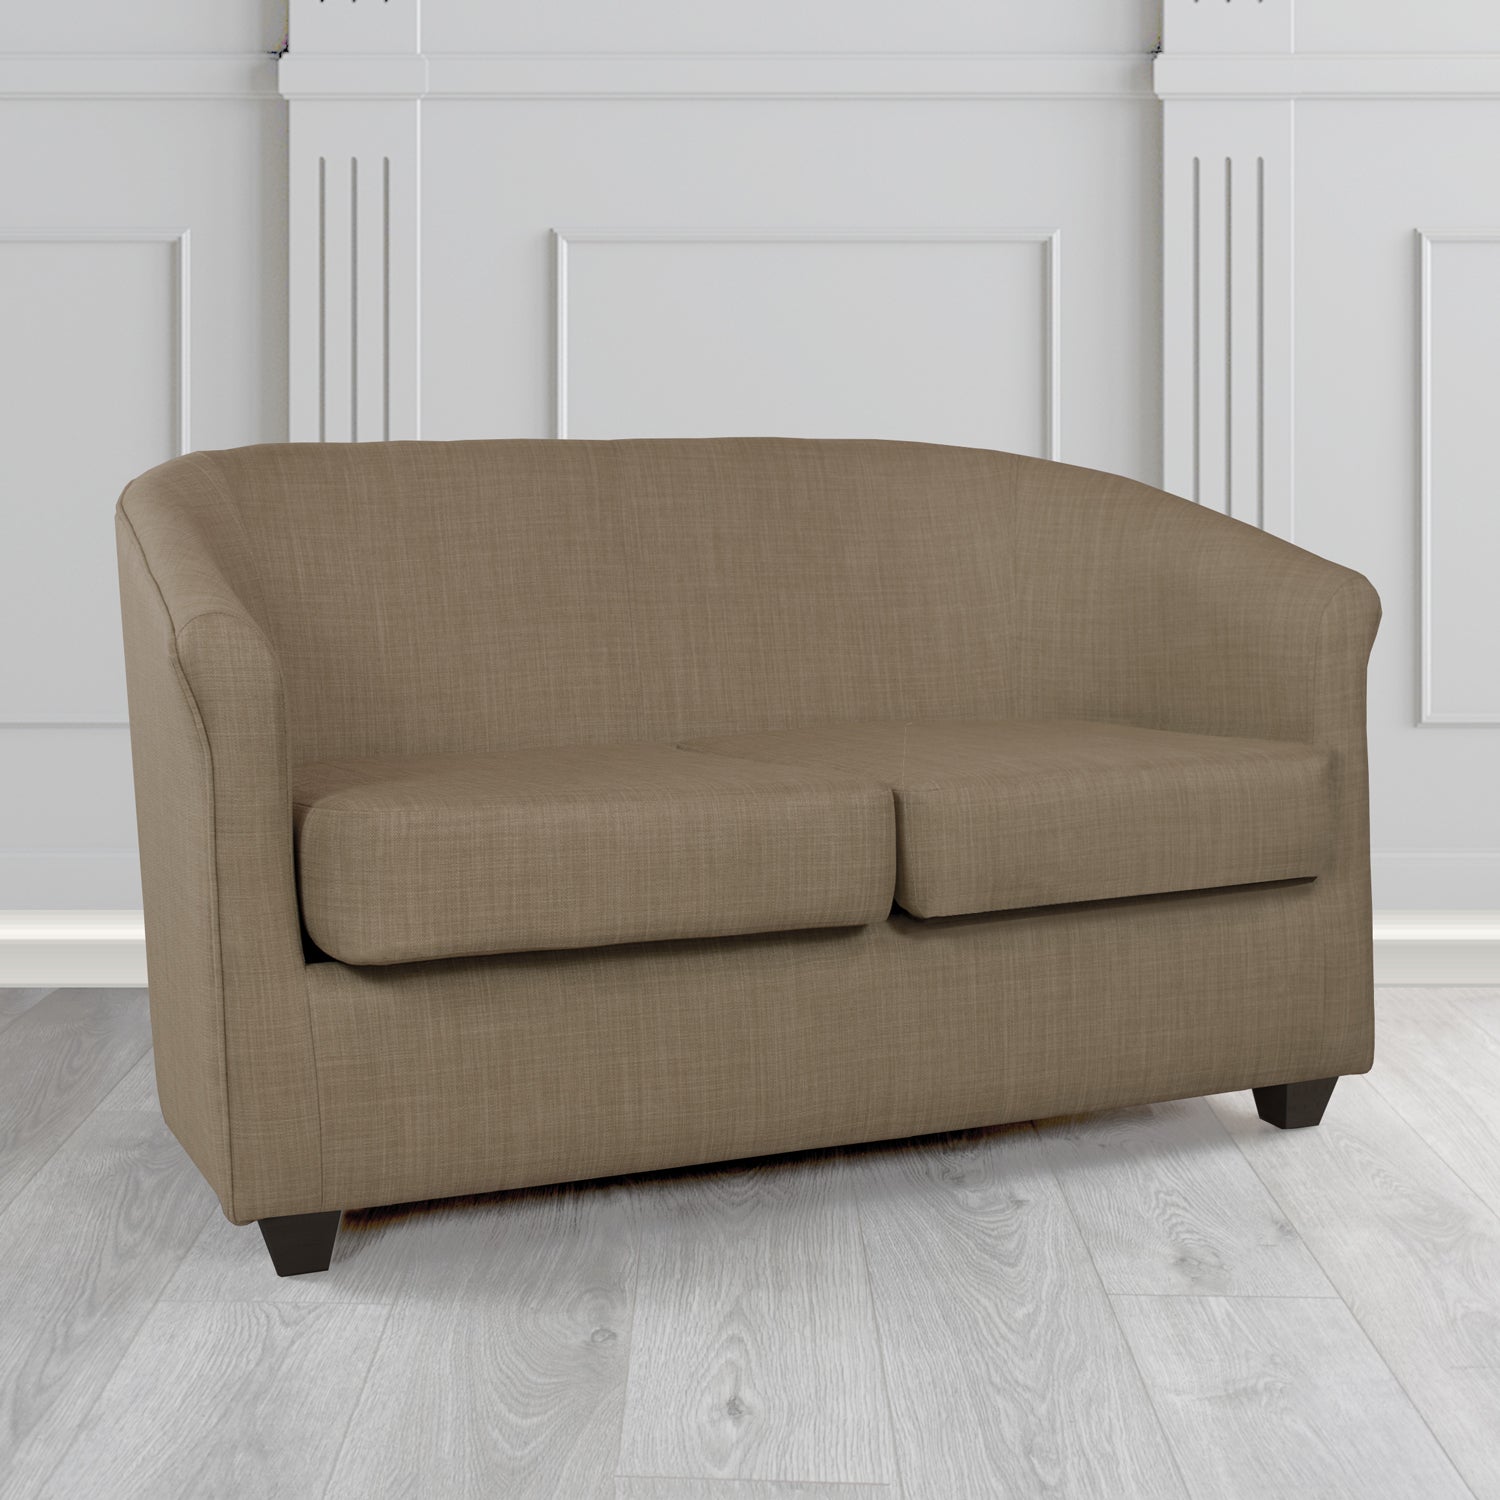 Cannes Charles Nutmeg Linen Fabric 2 Seater Tub Sofa - The Tub Chair Shop